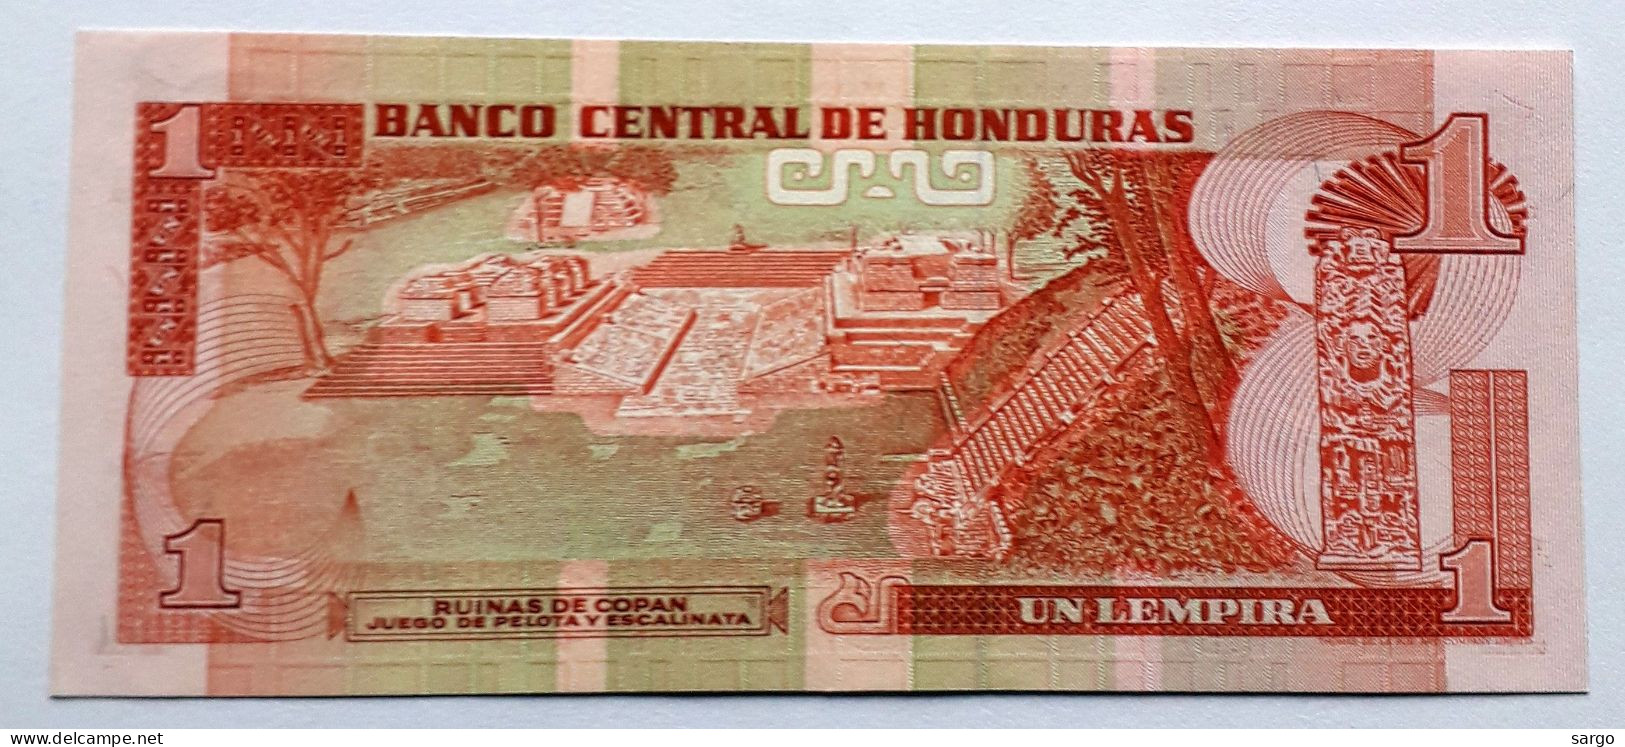 HONDURAS - 1 LEMPIRA - P 68 C (1989) - UNC - BANKNOTES - PAPER MONEY - CARTAMONETA - - Honduras